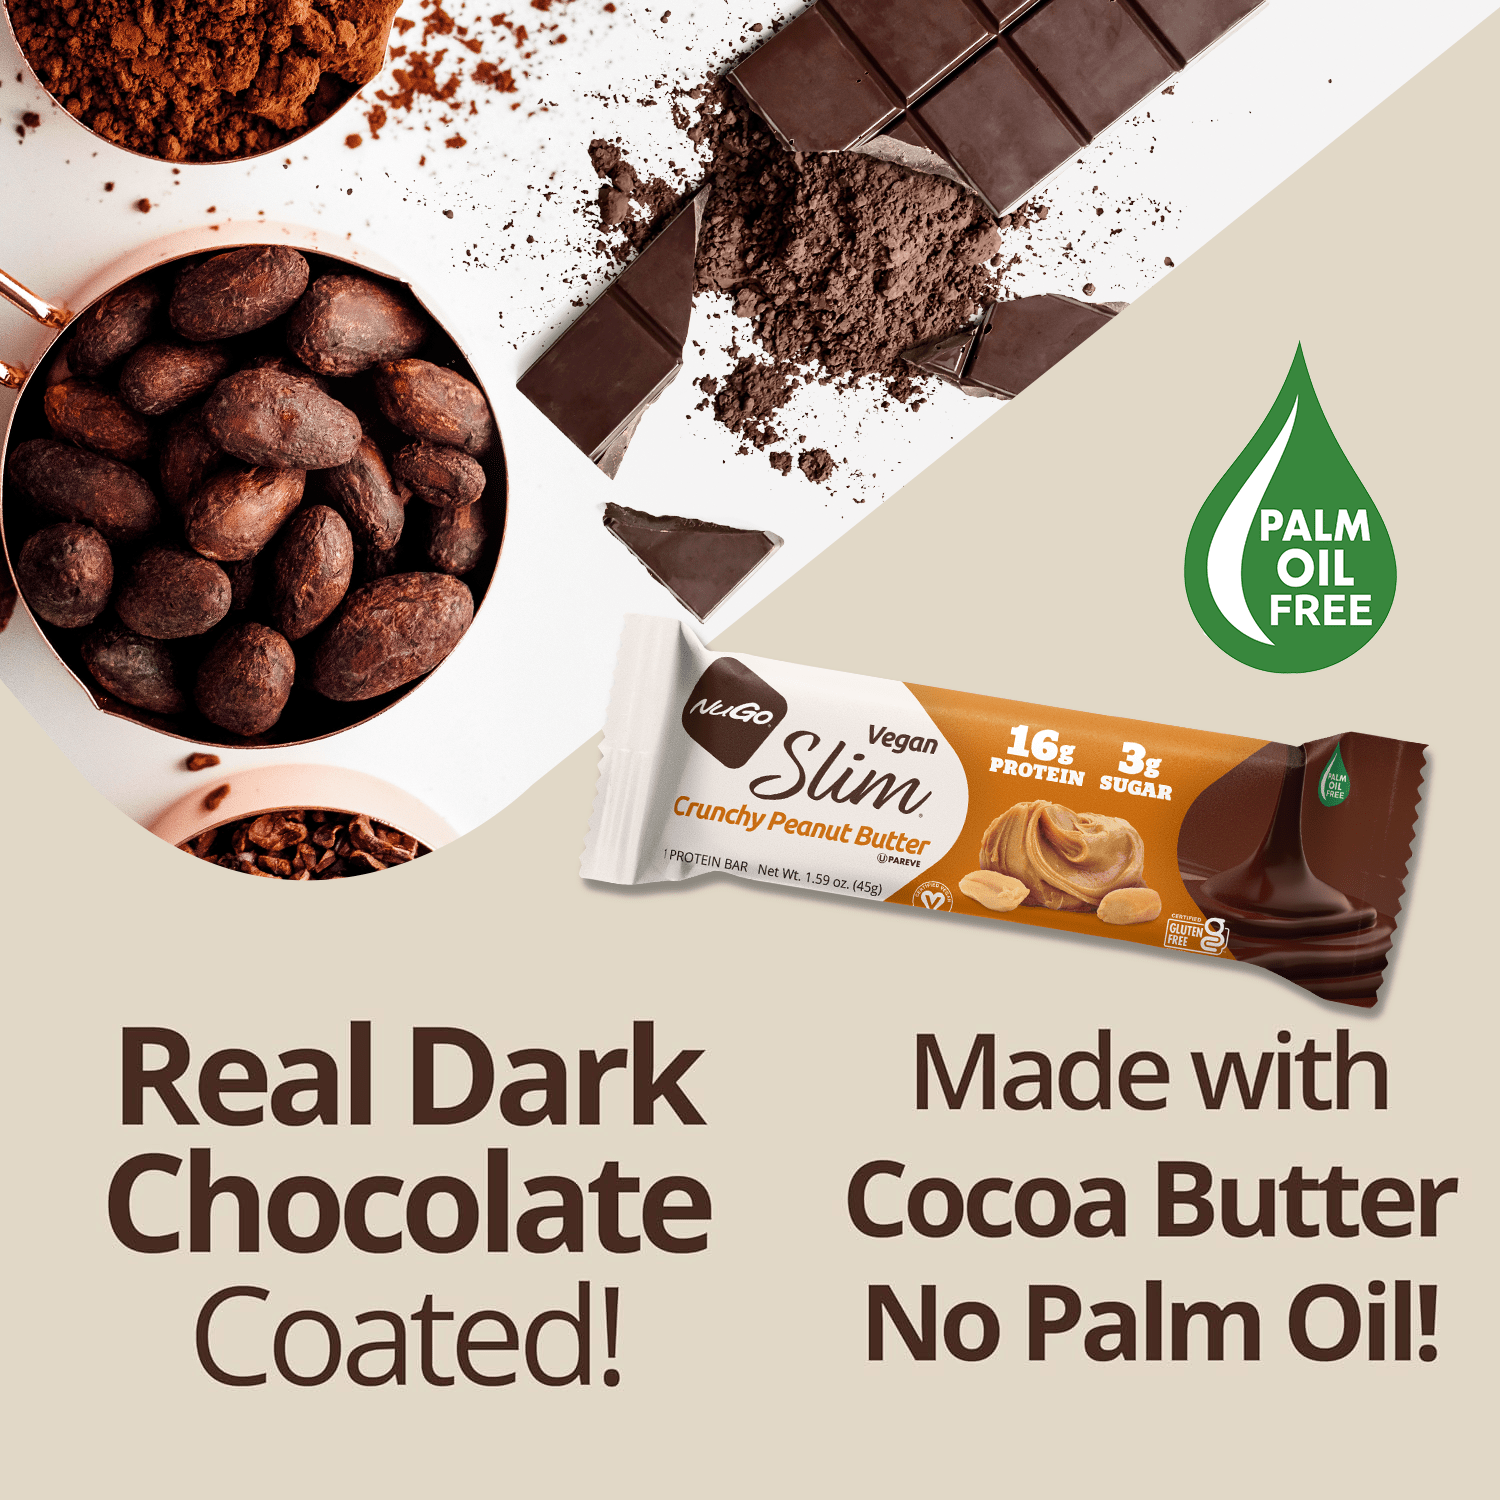 Real Dark Chocolate Text Image